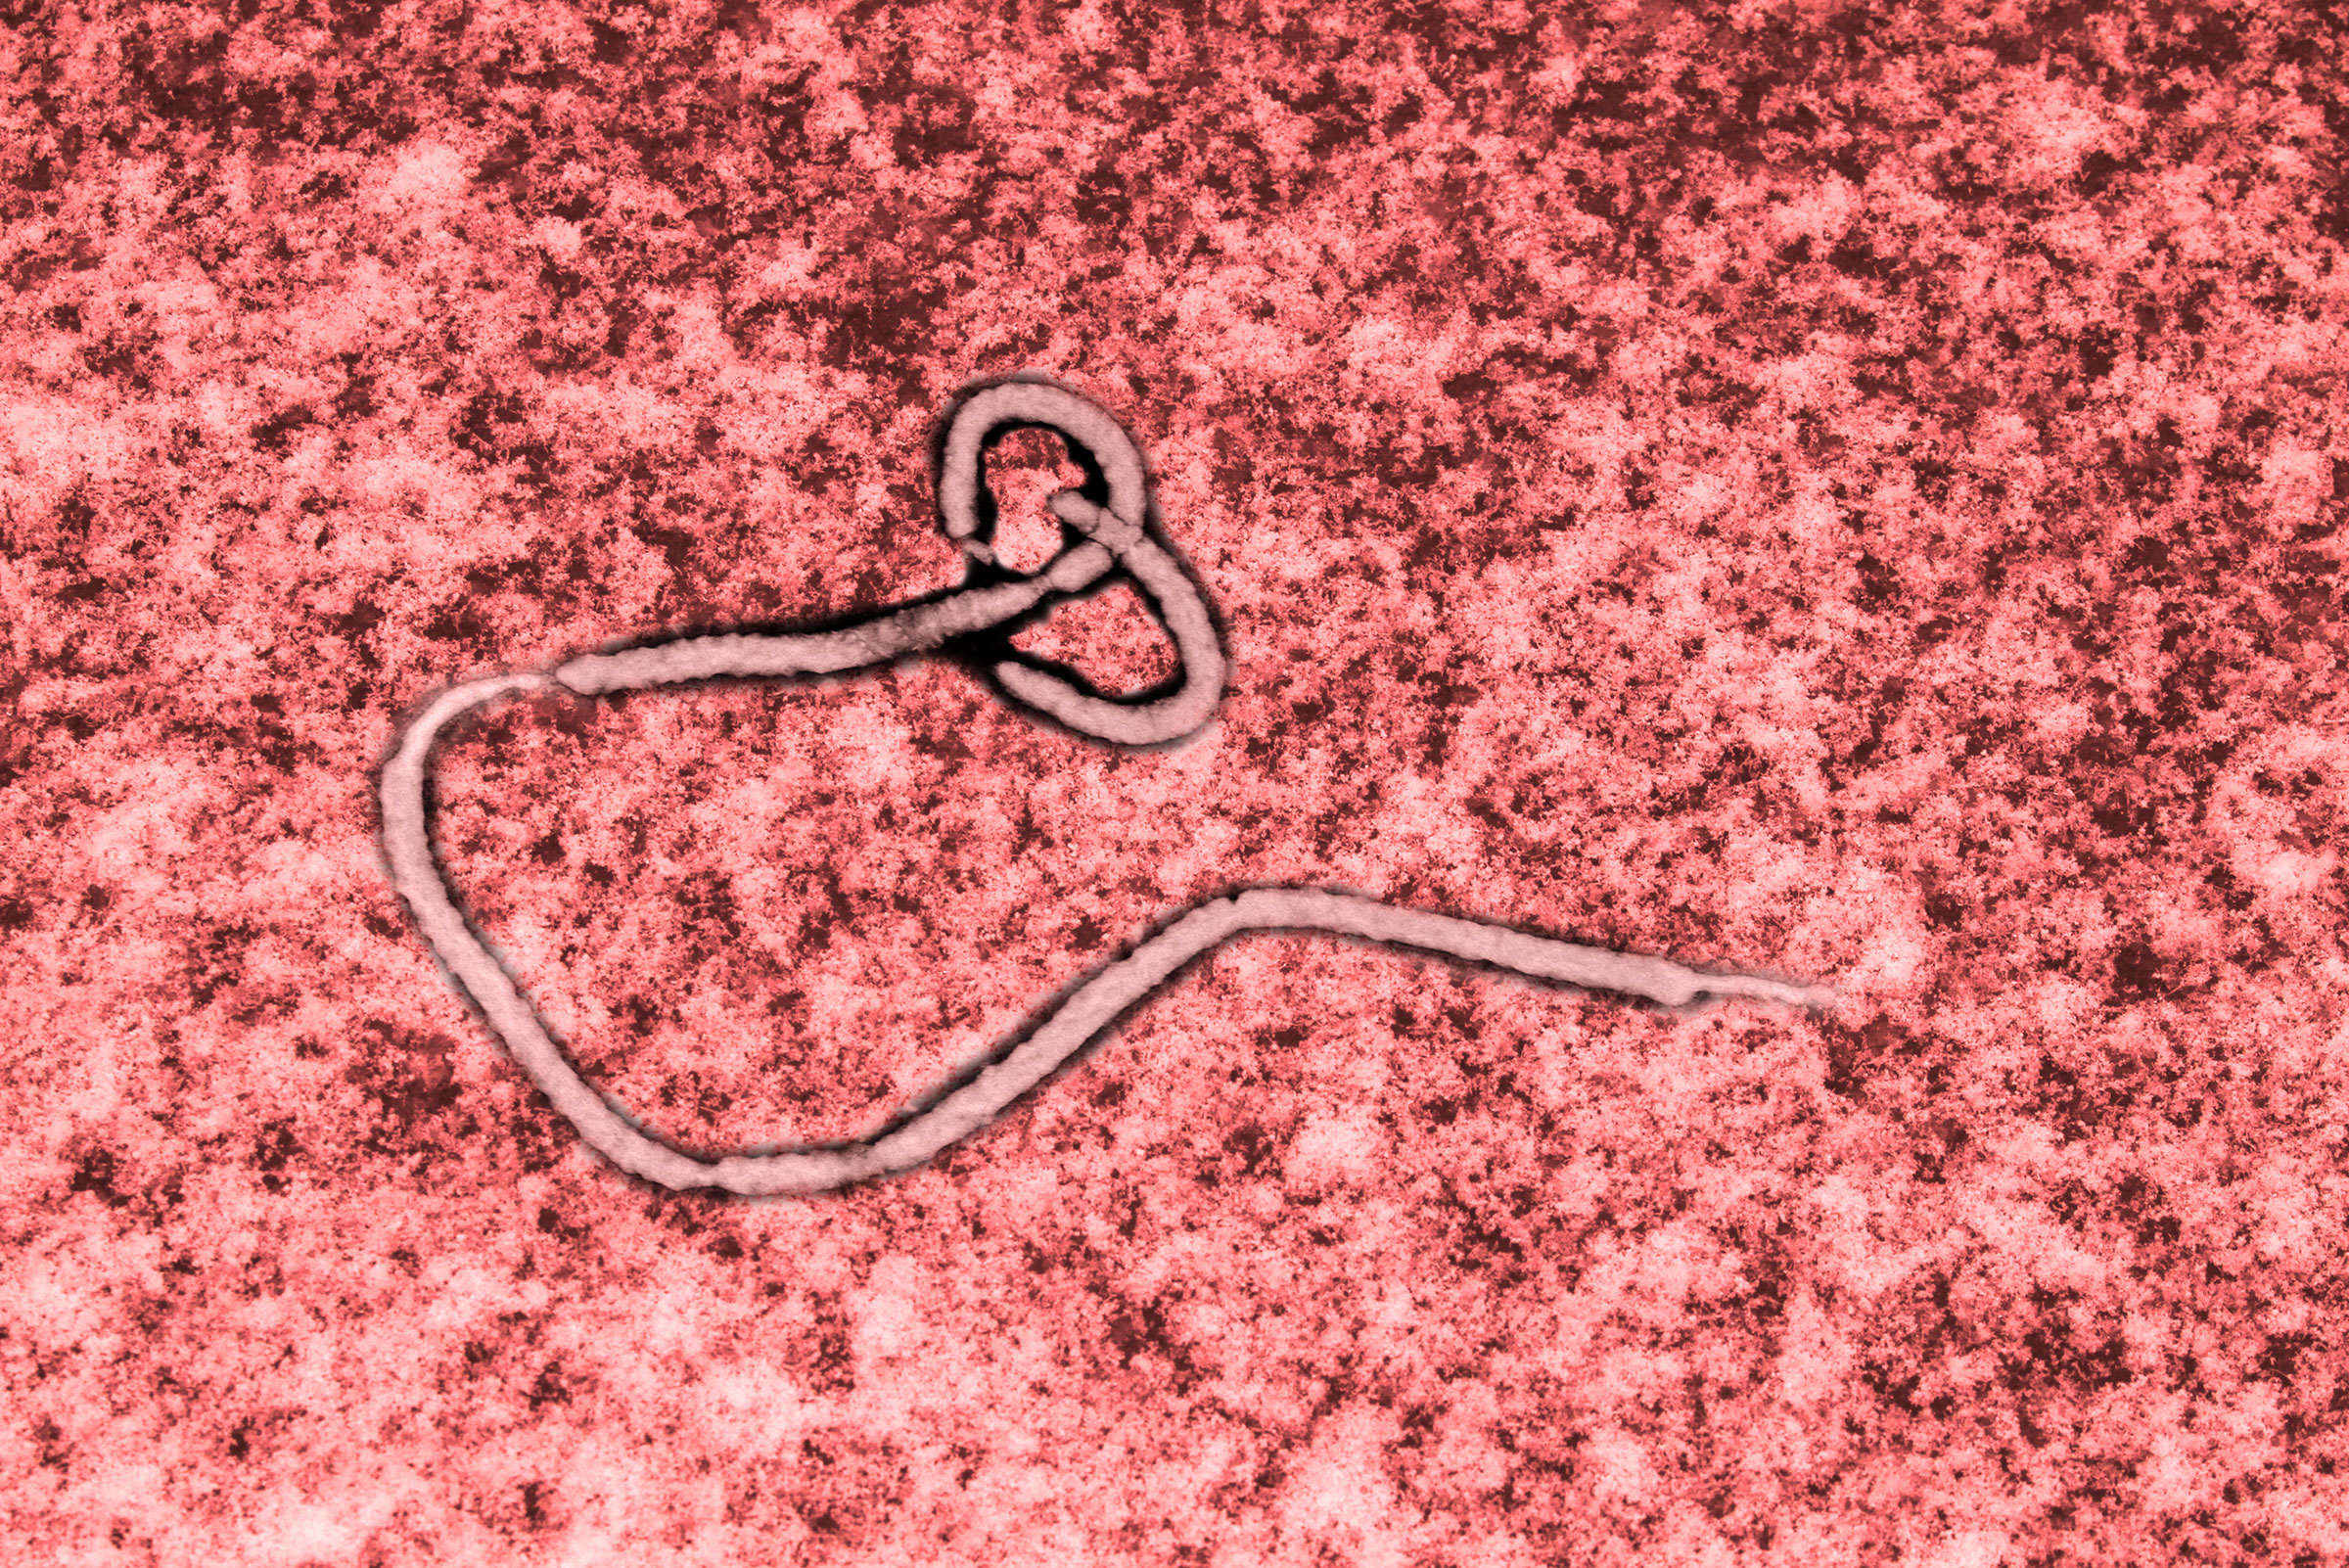 Ebola Virus under a microscope 